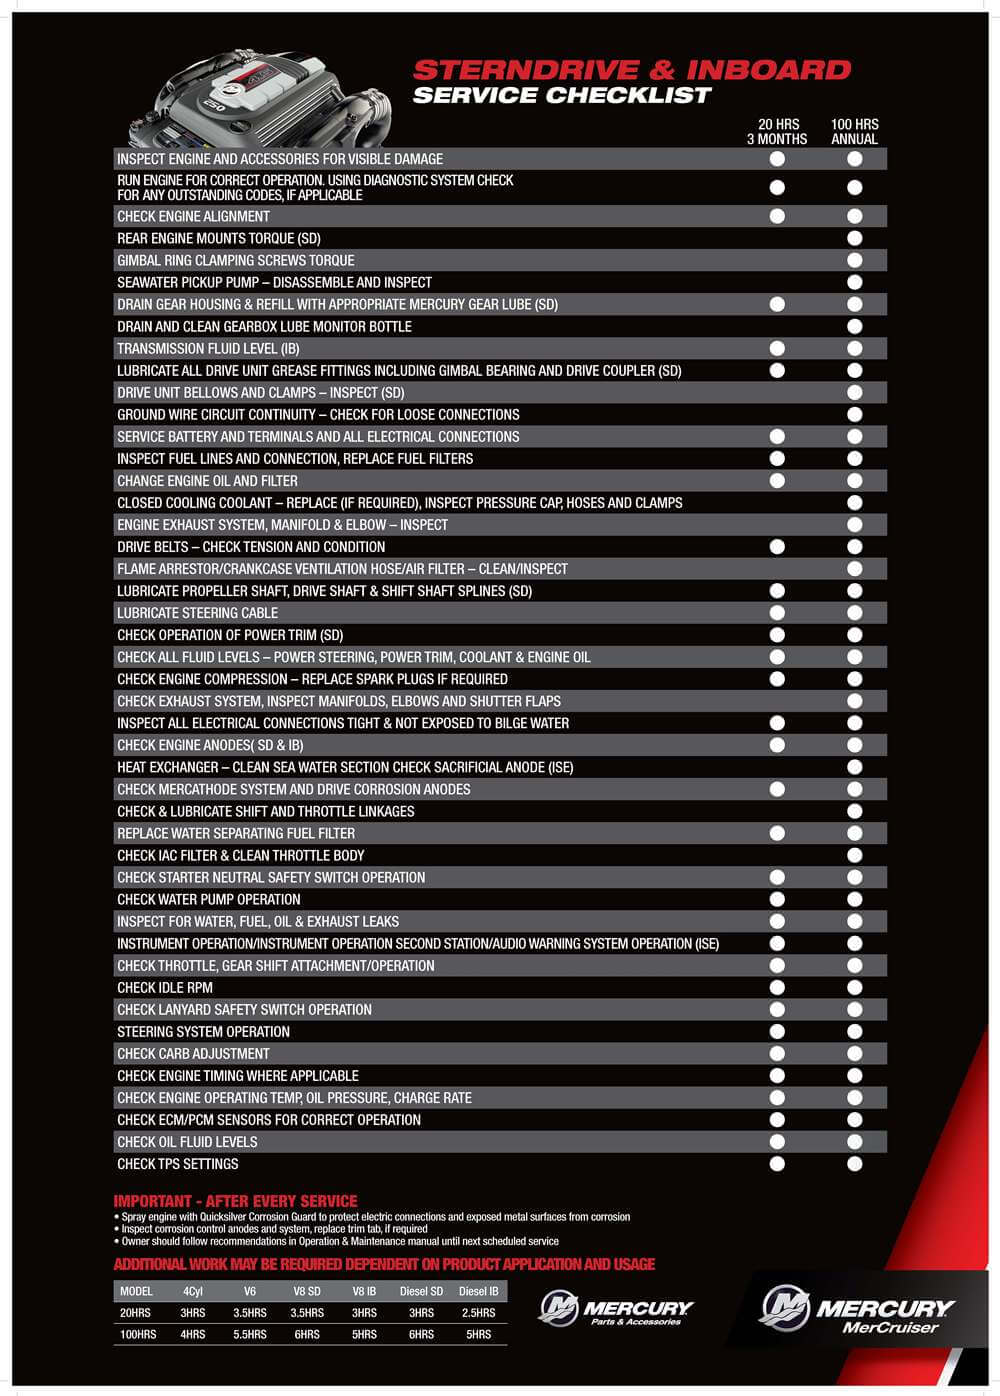 Inboard service checklist